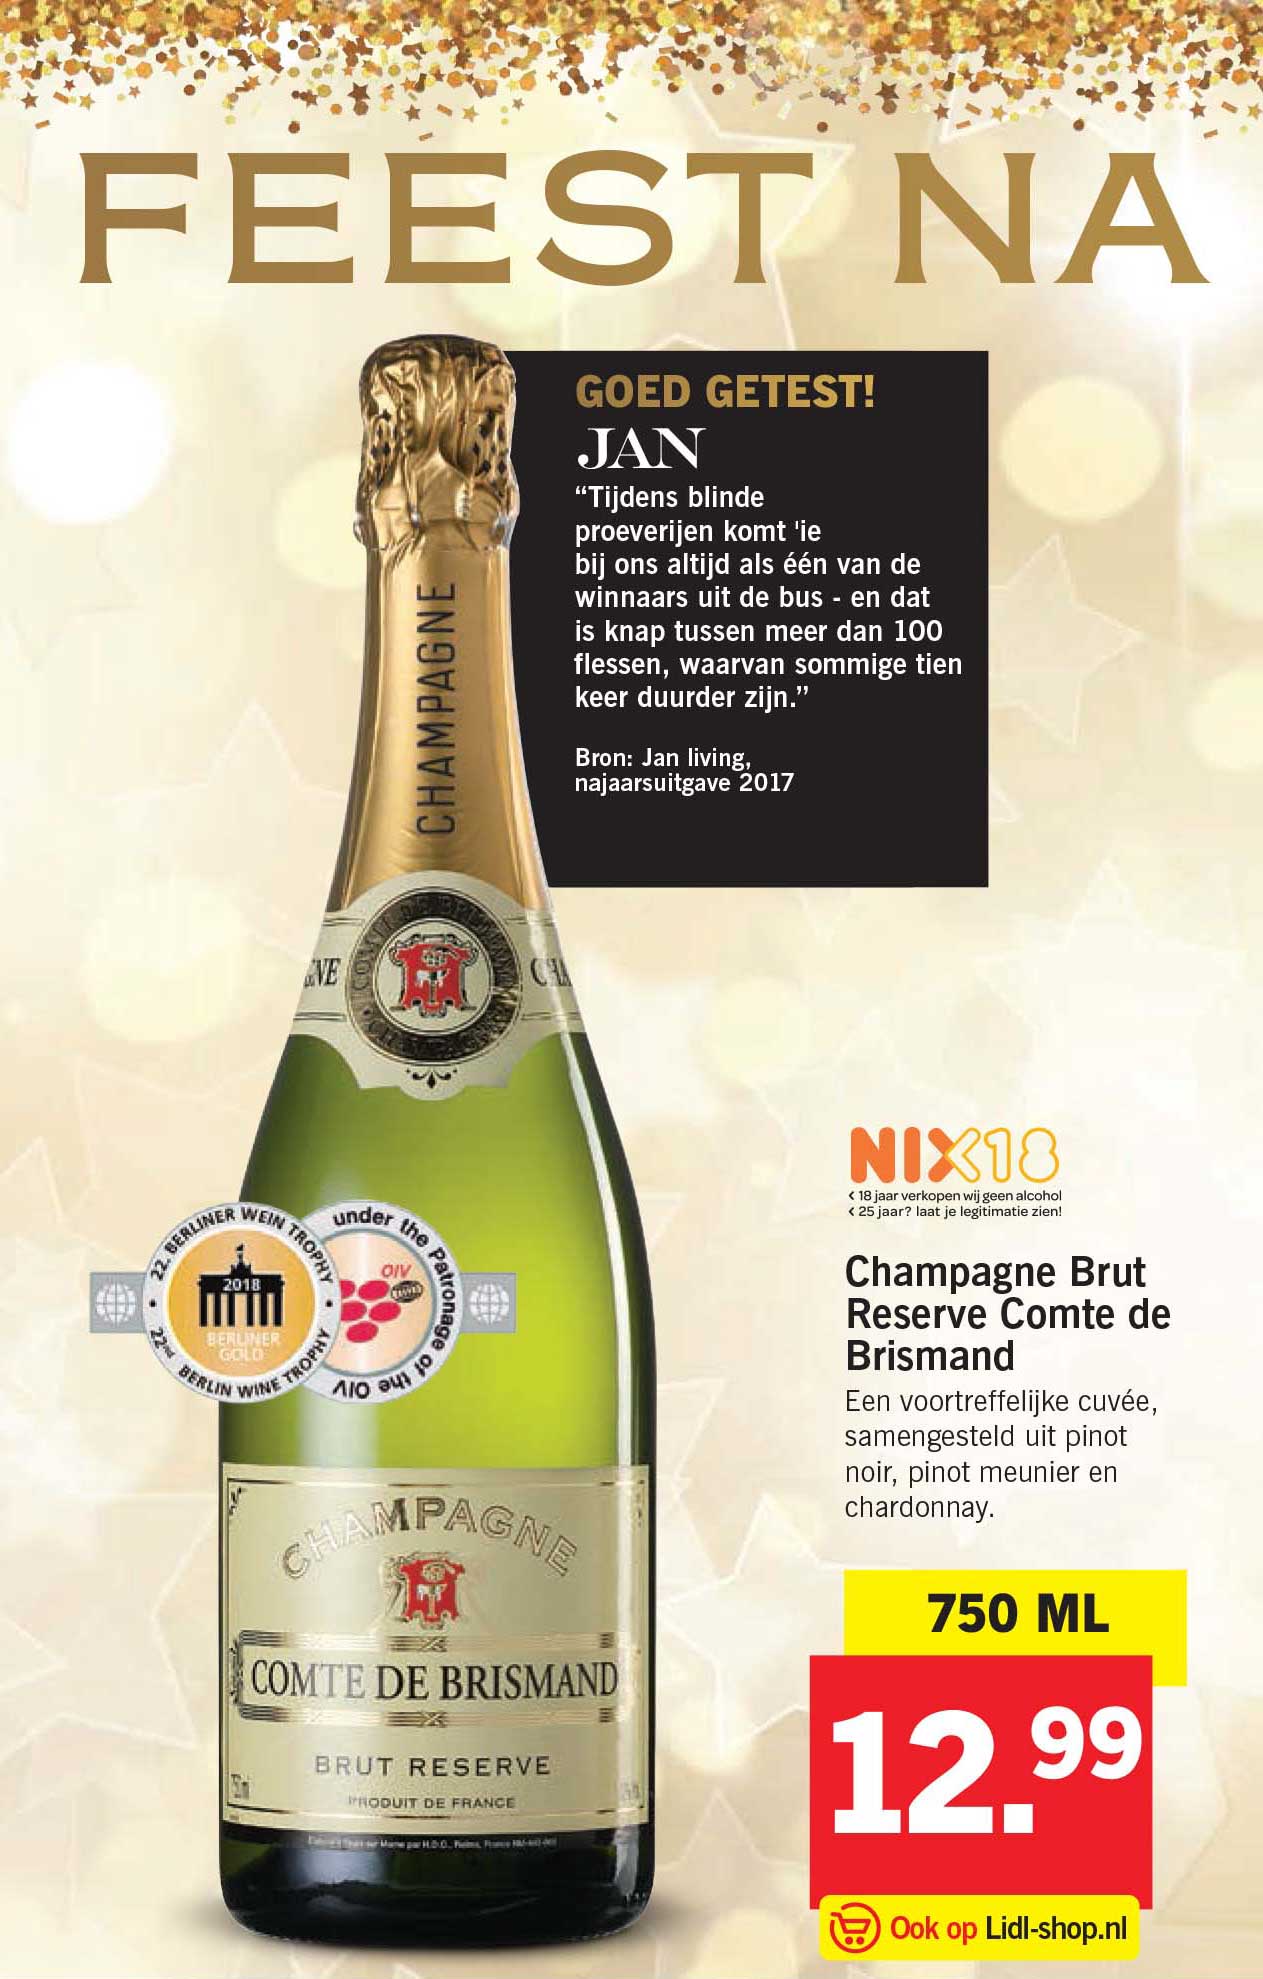 Champagne Brut Reserve Comte De bij Brismand Lidl Aanbieding